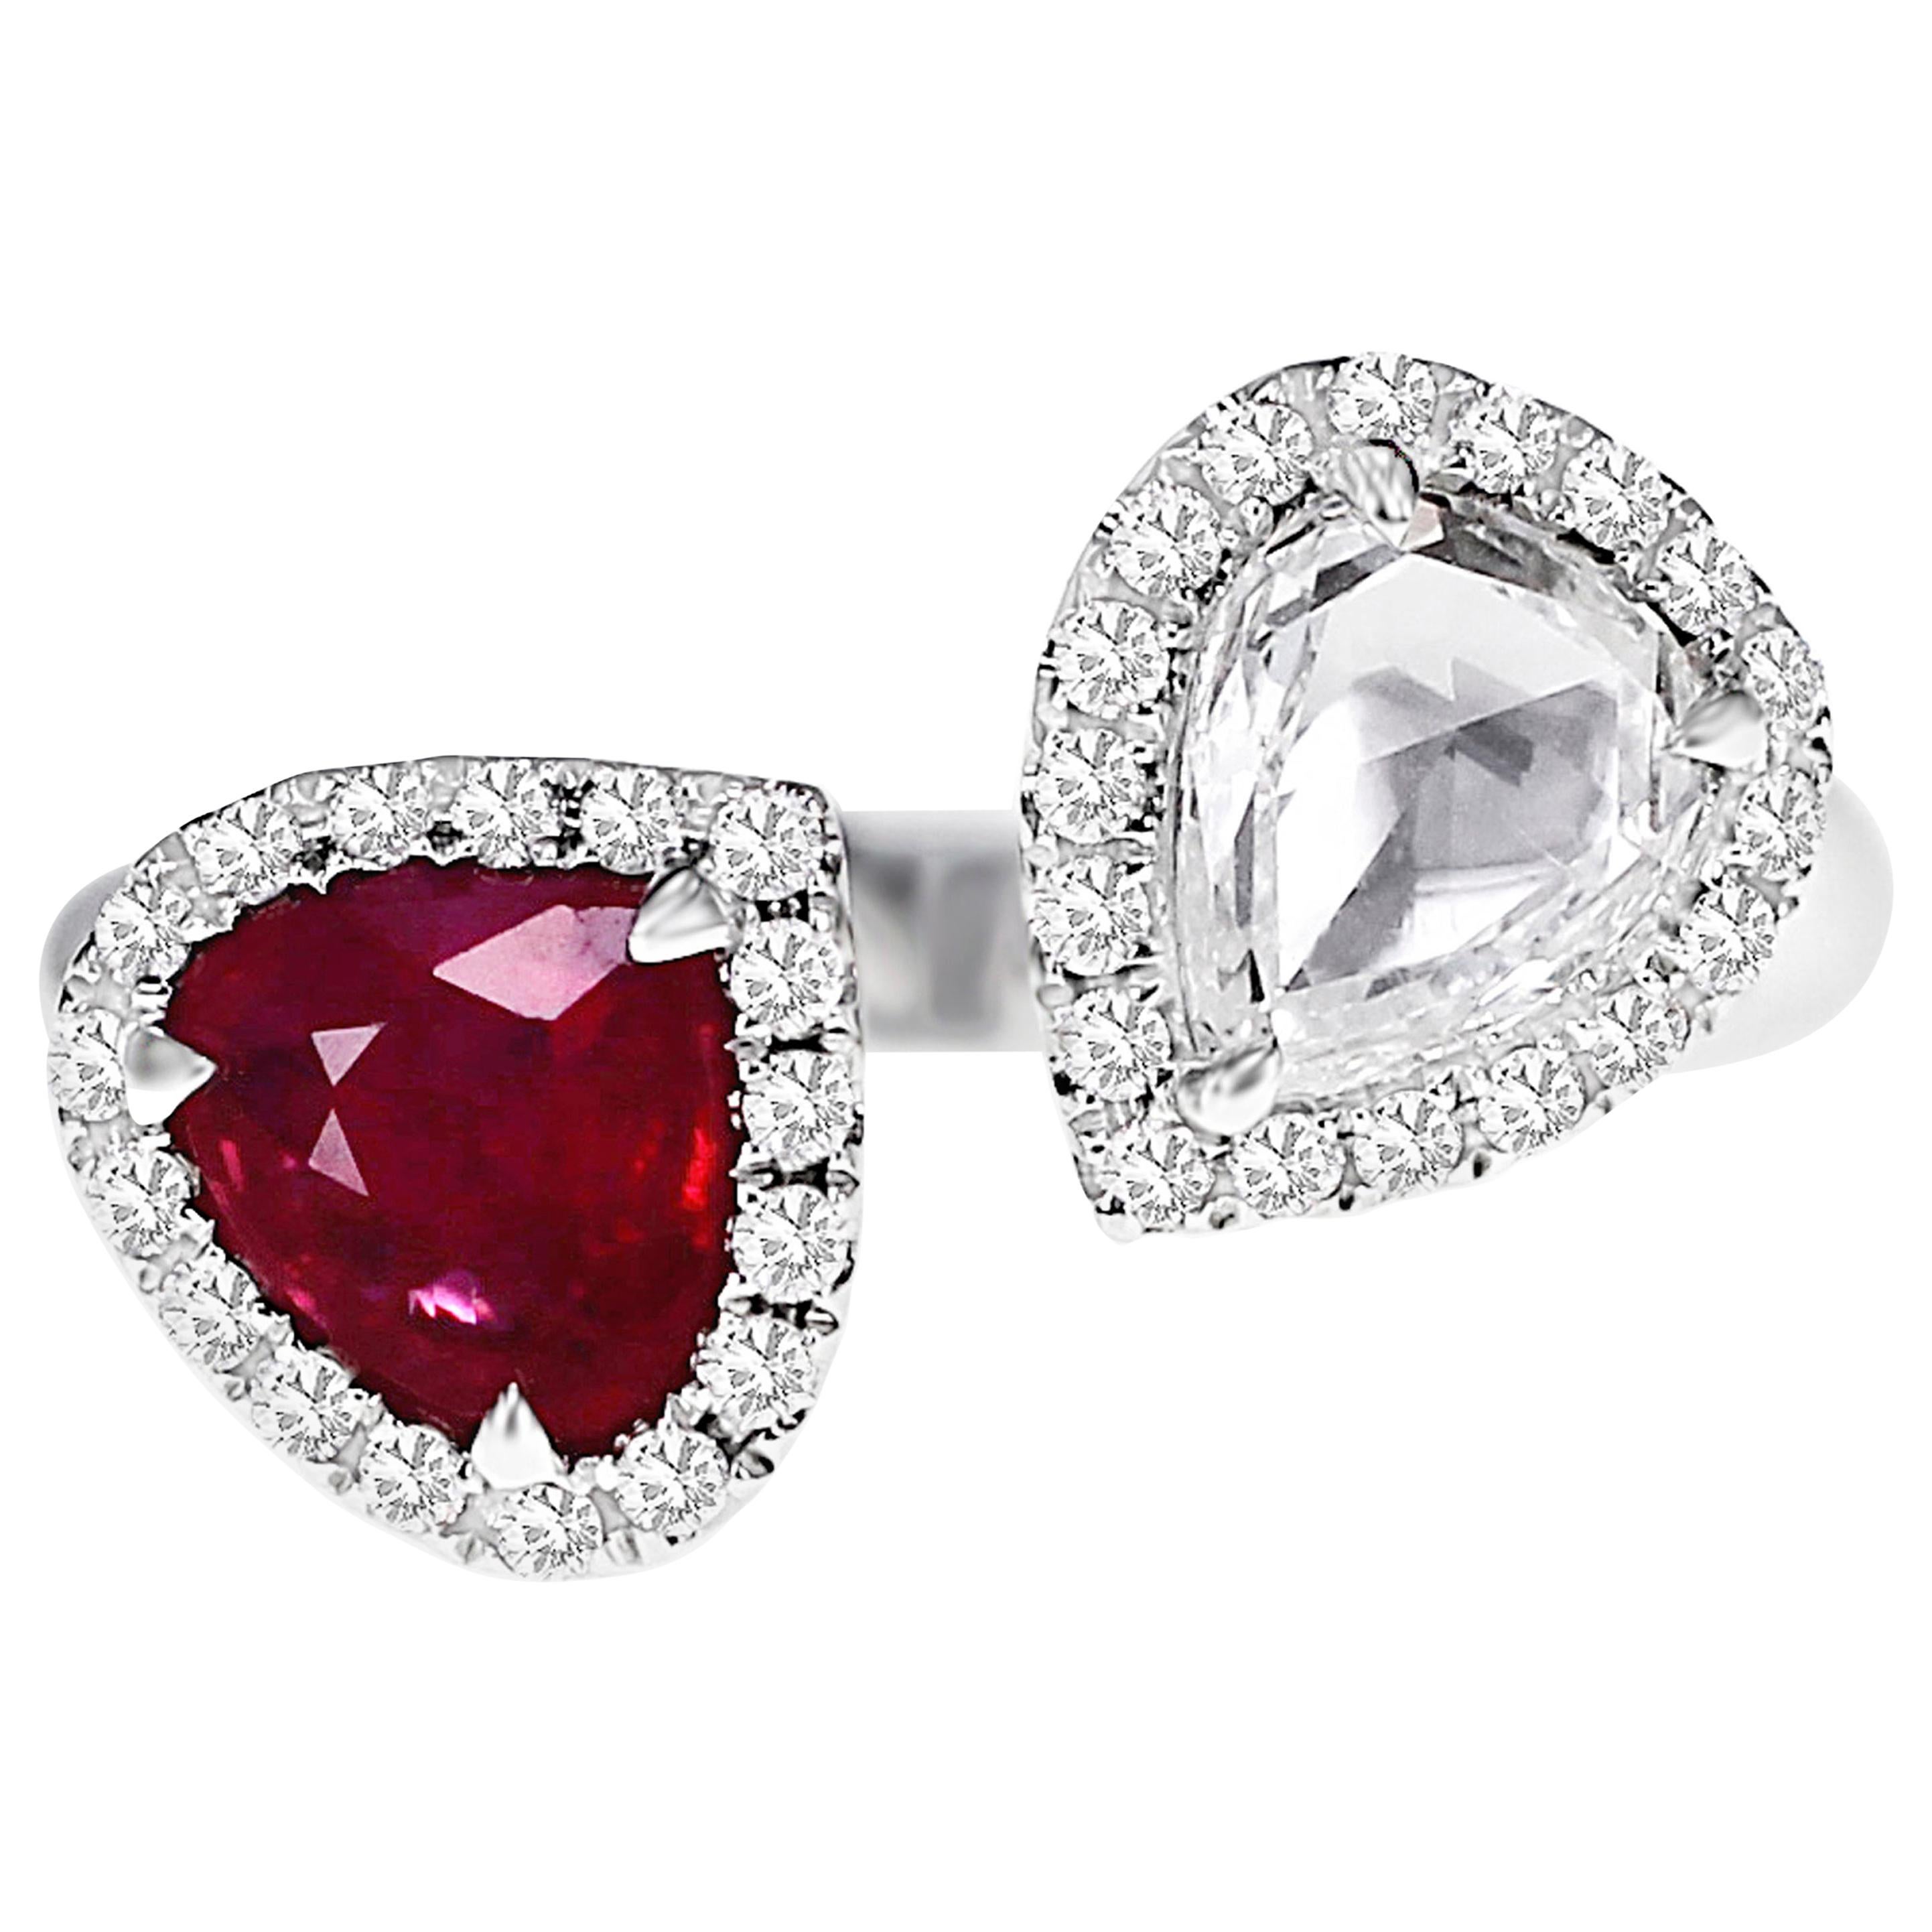 1.03 Carat Vivid Red Ruby and 1 Carat Diamond Twin Ring